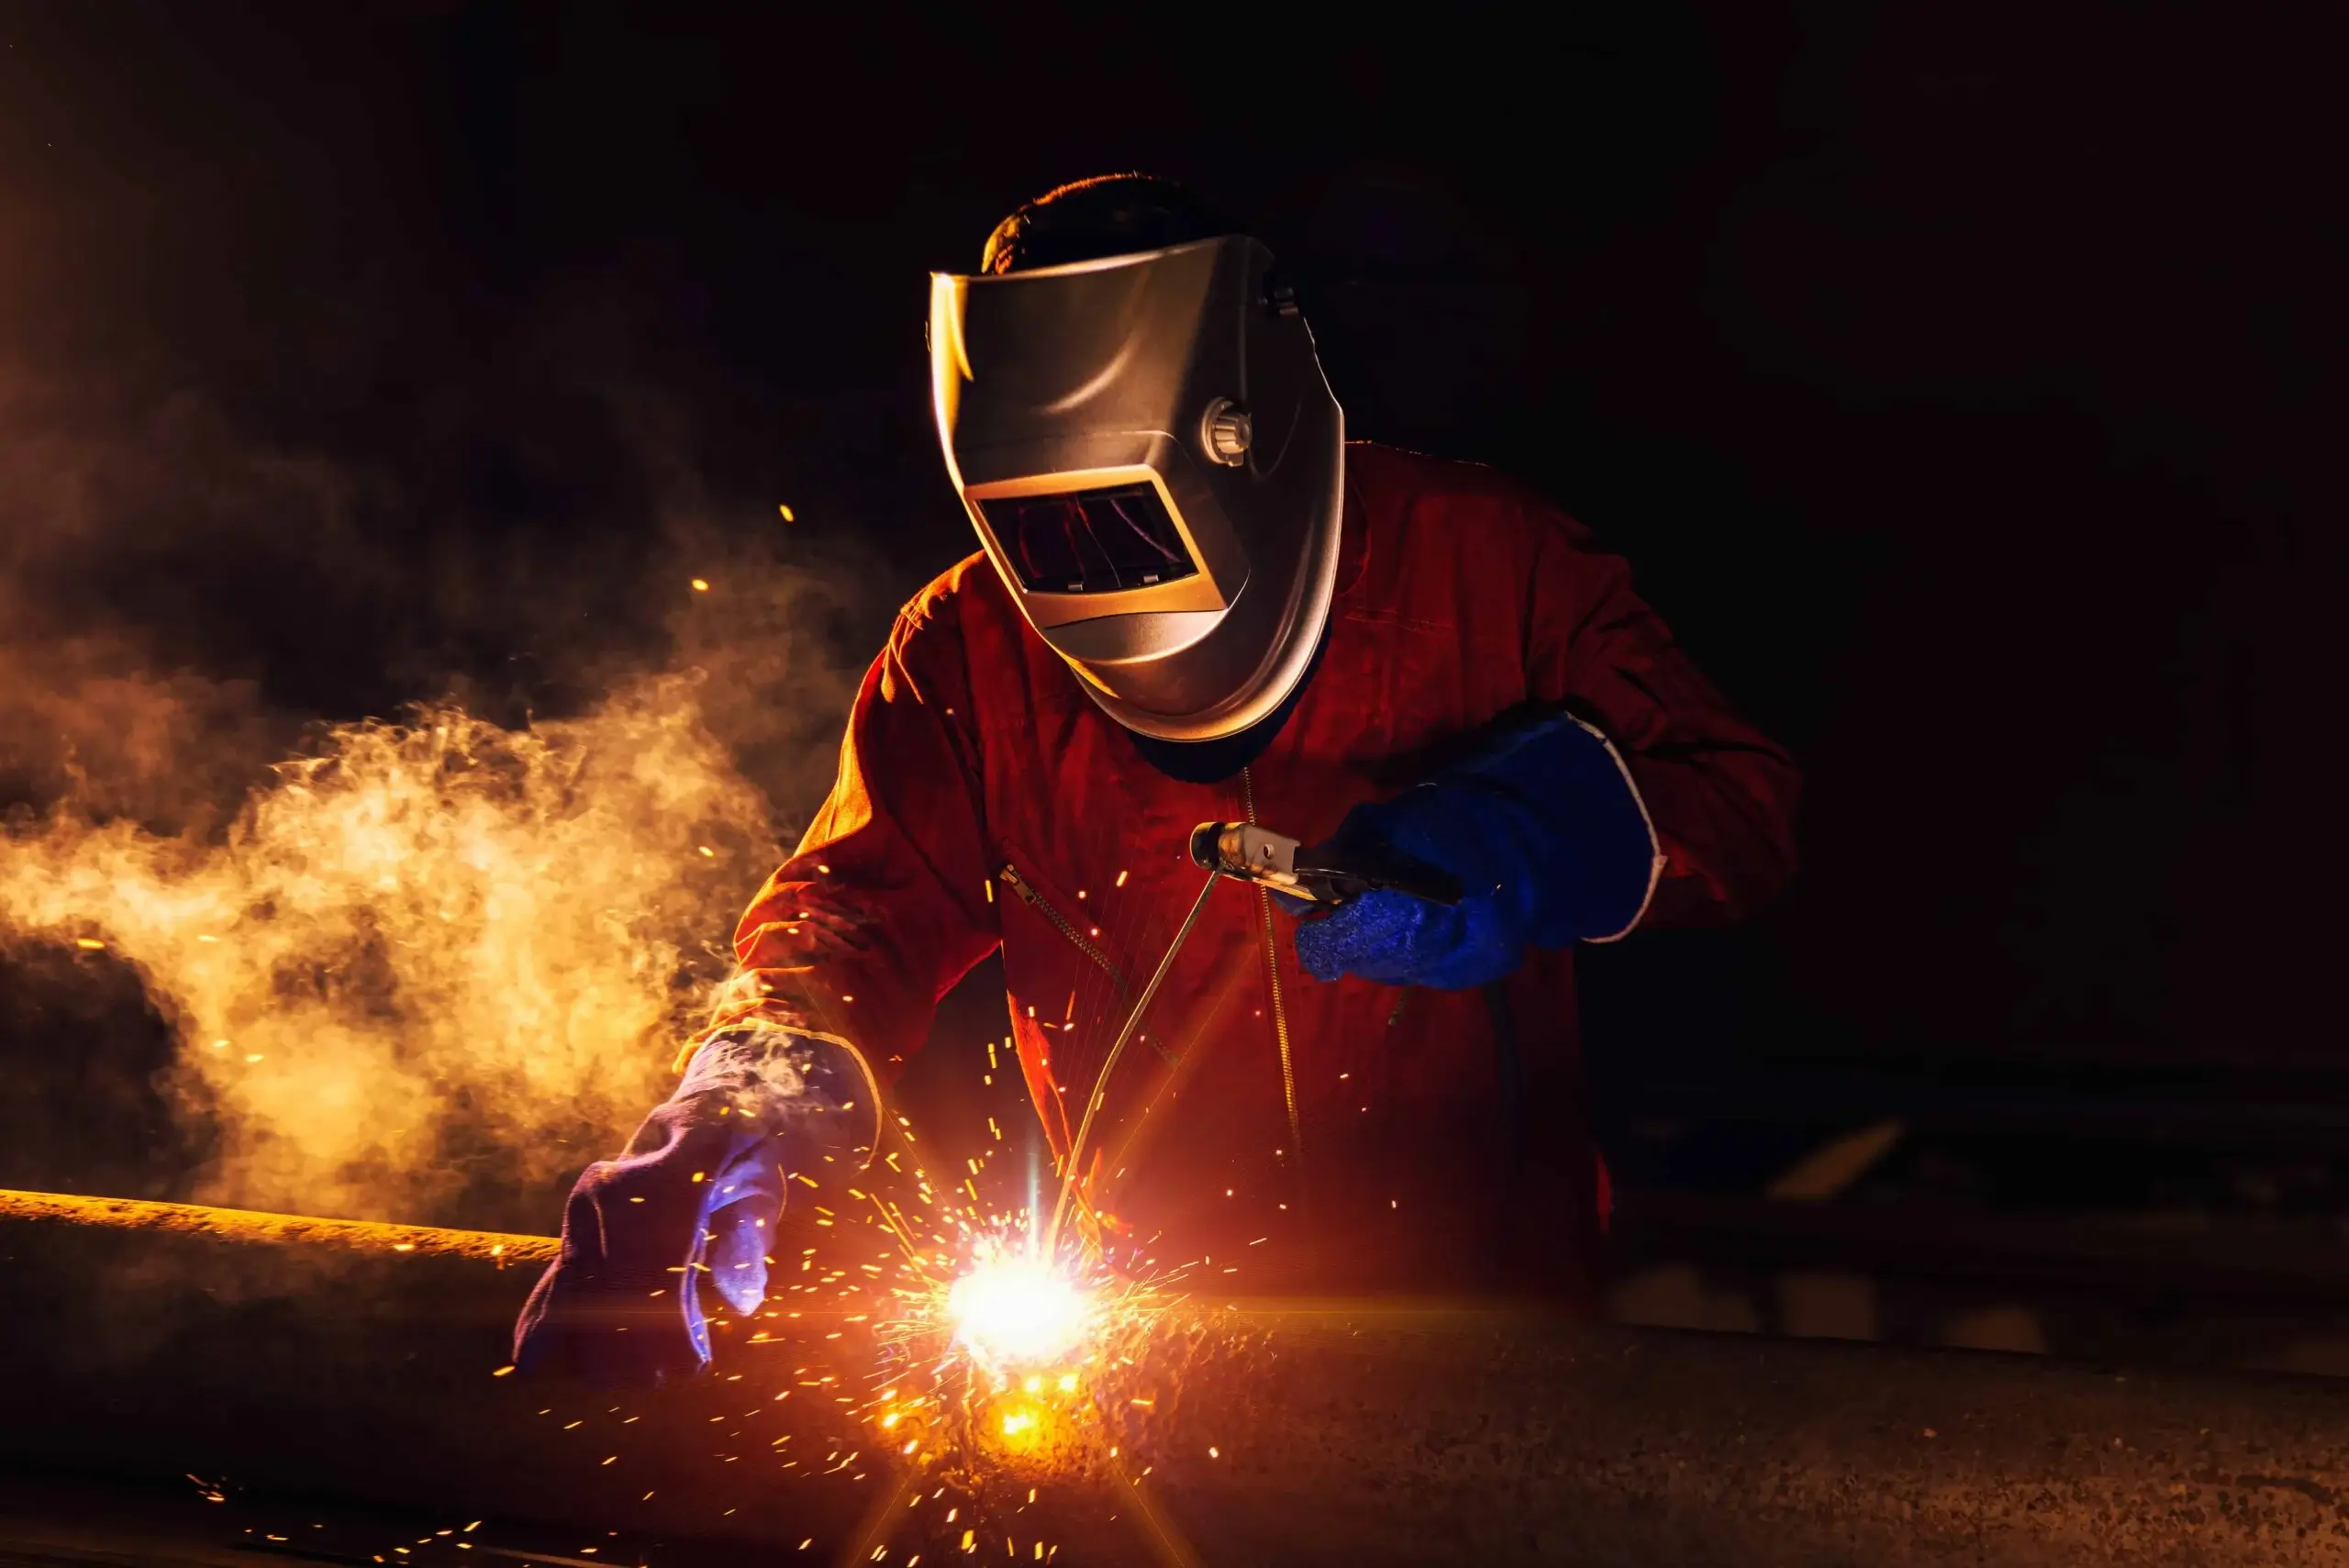 Man in full protective gear welding some metal in the dark.